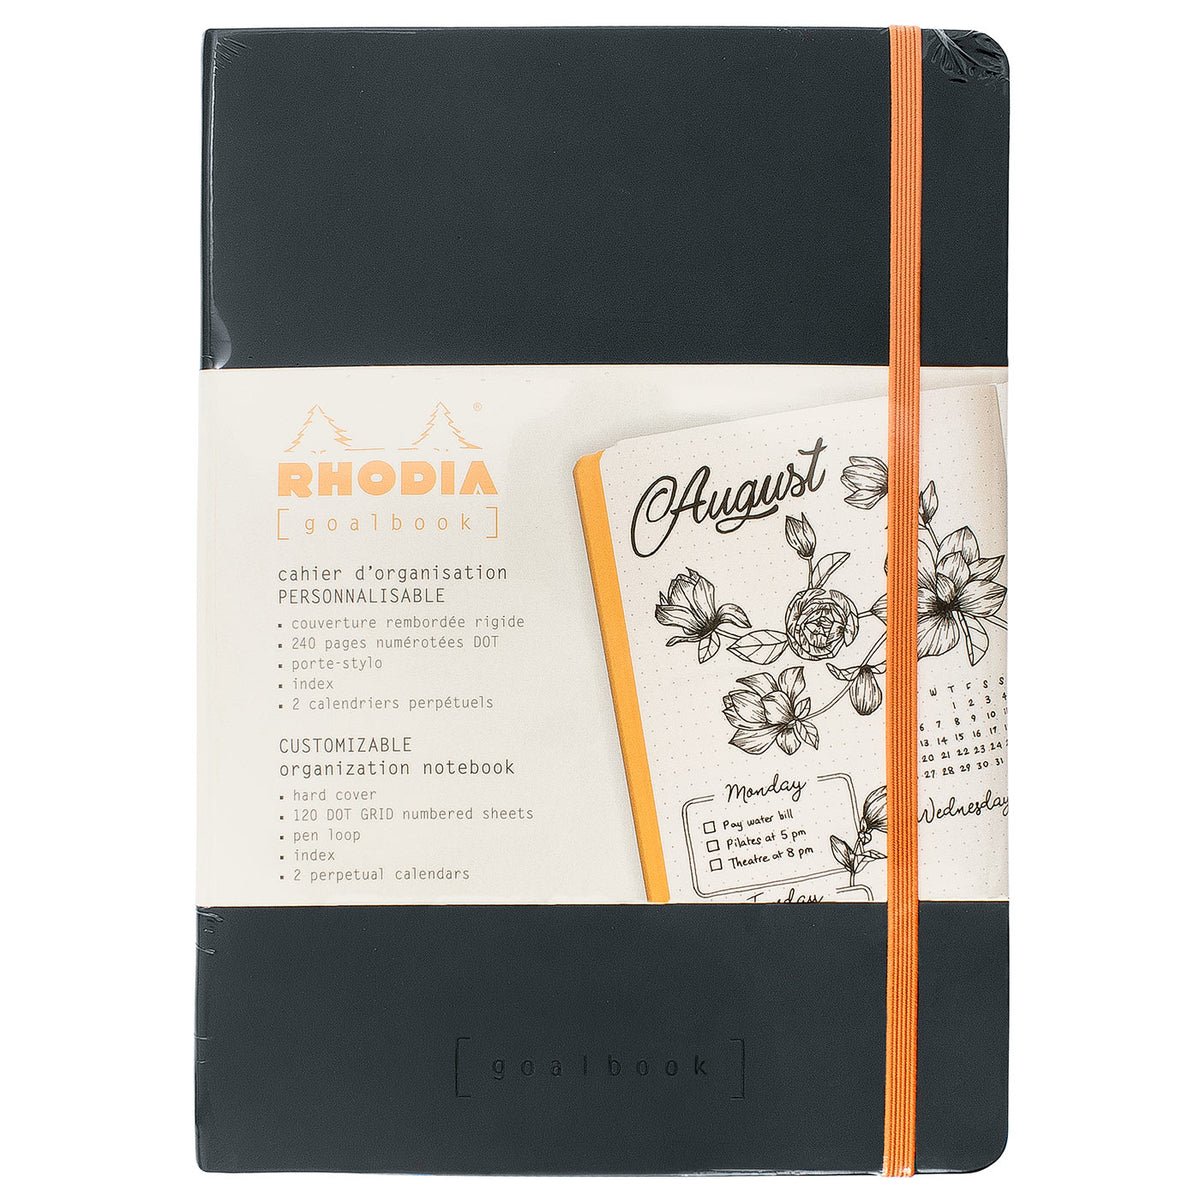 Rhodia Goalbook Hardcover A5 - Black